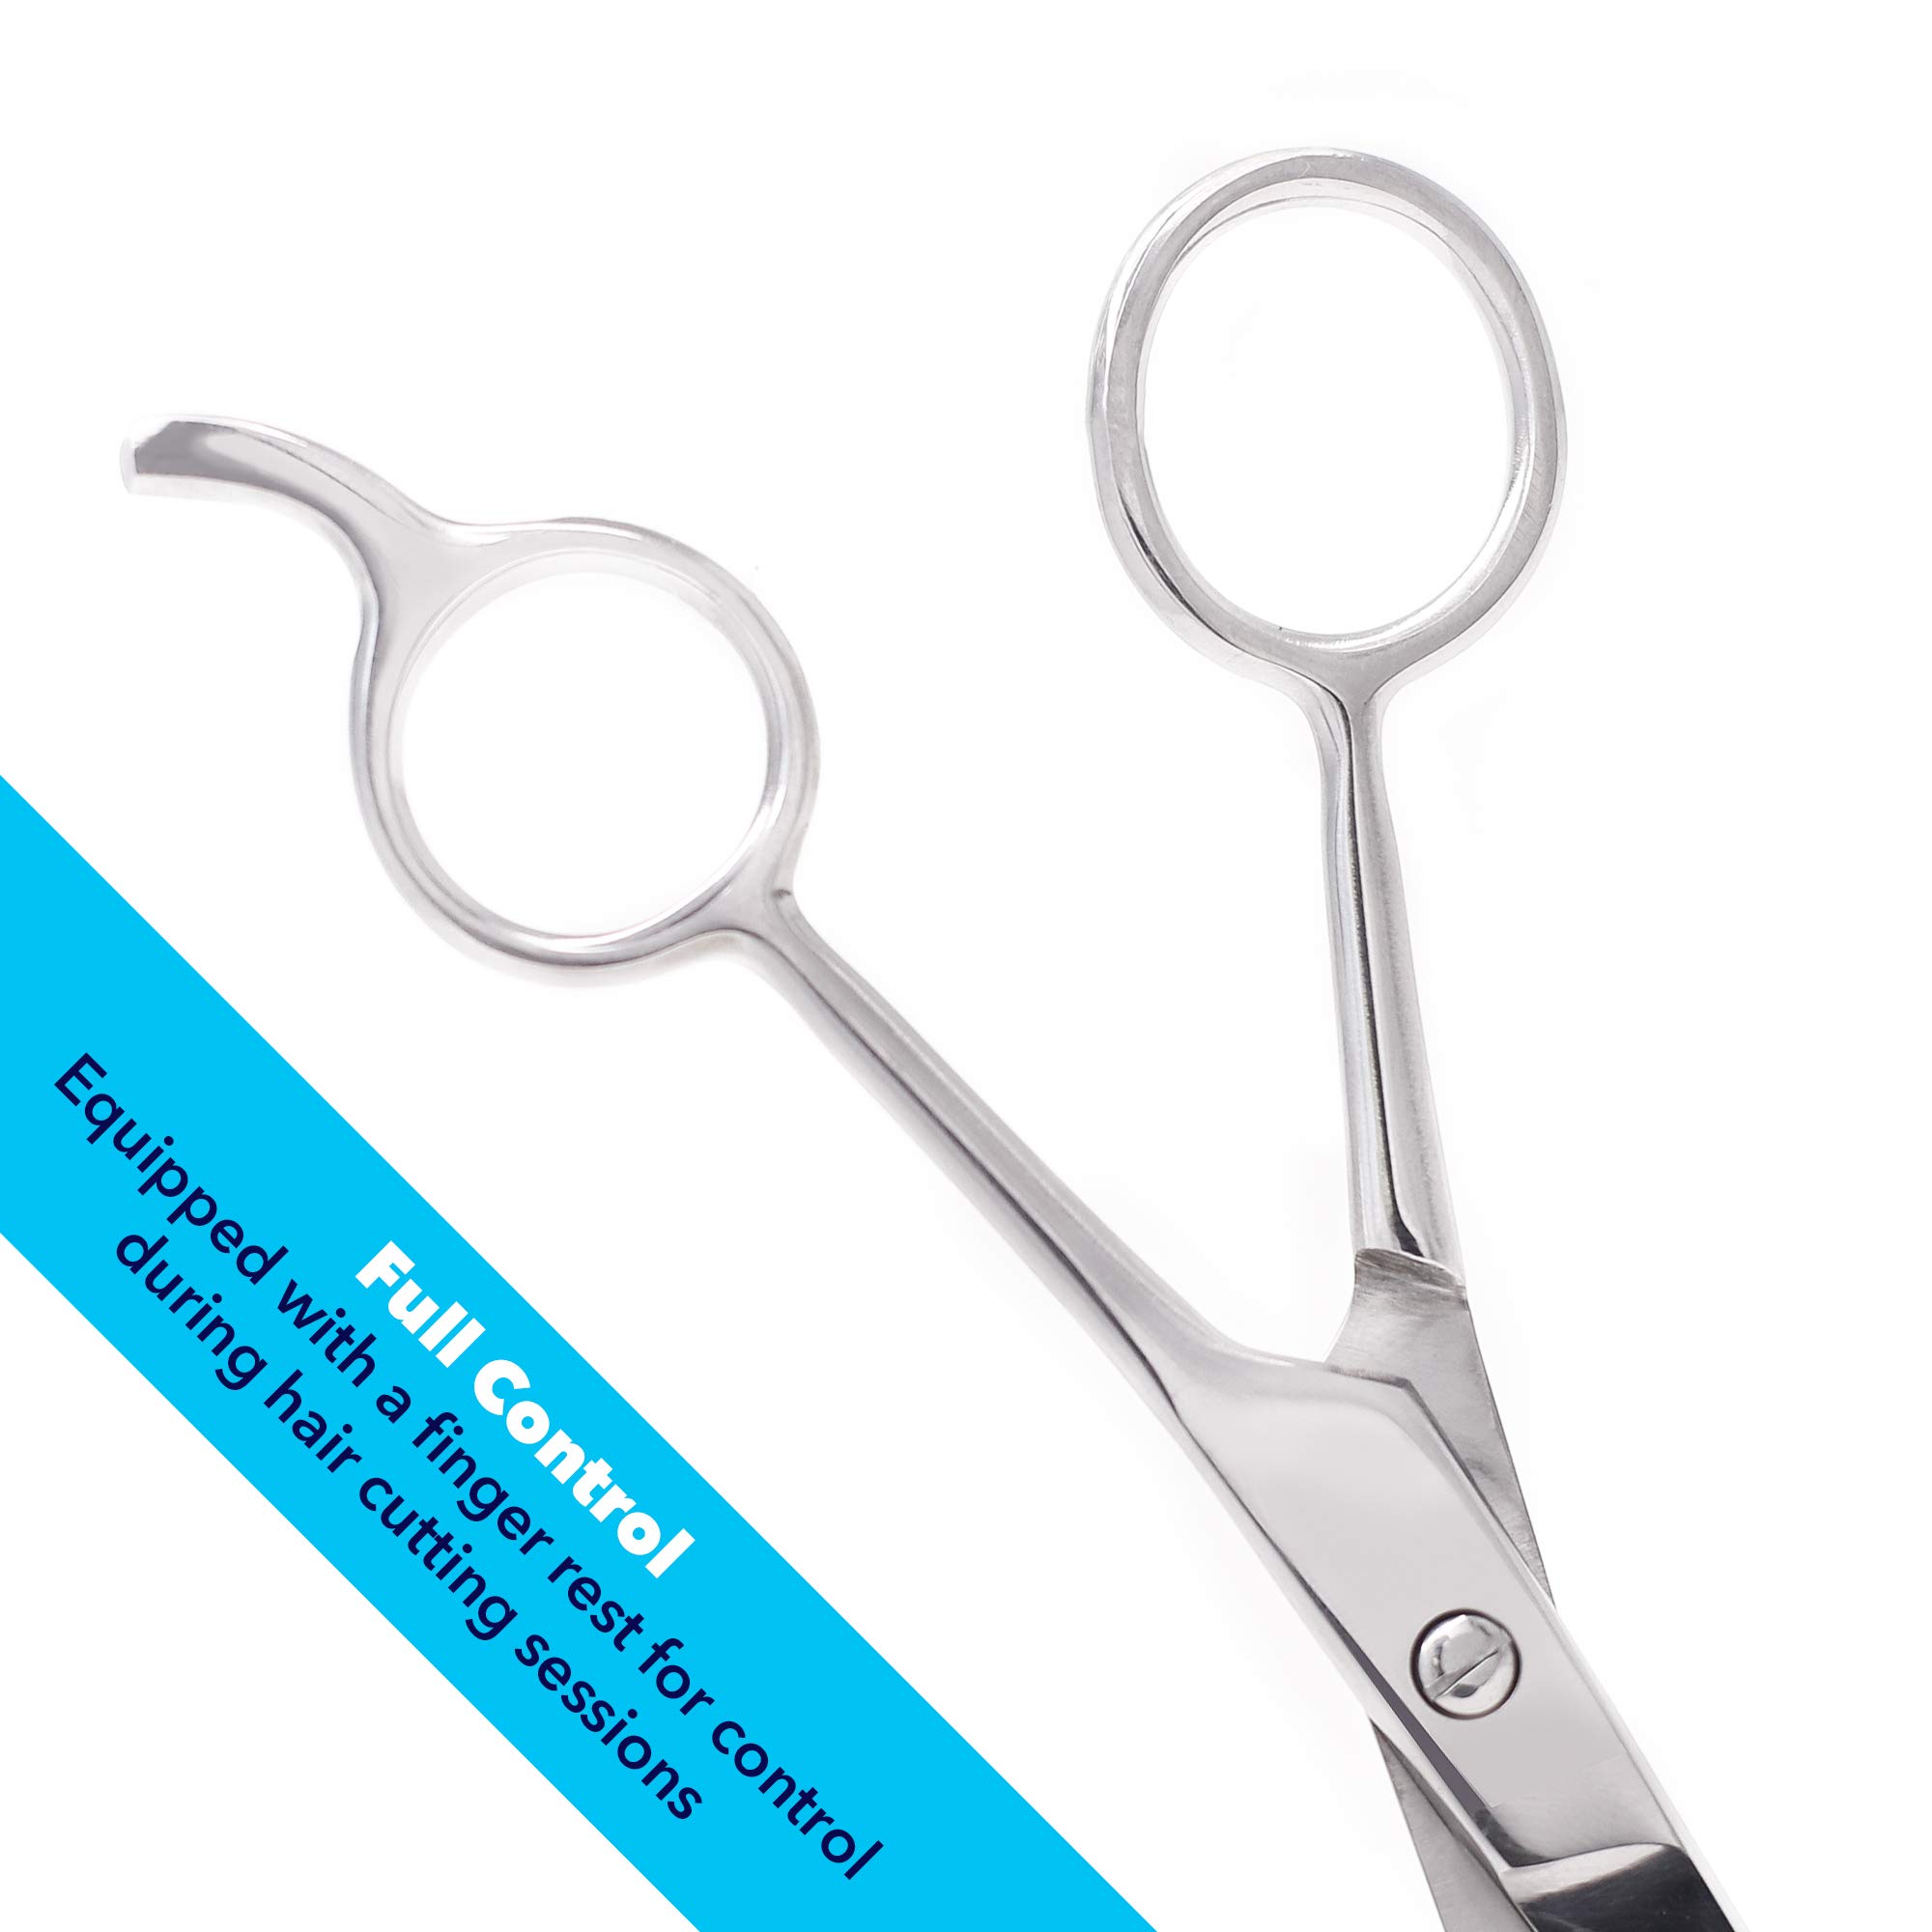 Equinox International, Professional Hair Scissors, Hair Cutting Scissors Professional, 6.5” Overall Length, Barber Scissors For Men & Women, Premium Shears For Salon & Home Use (Ice Tempered, Silver)